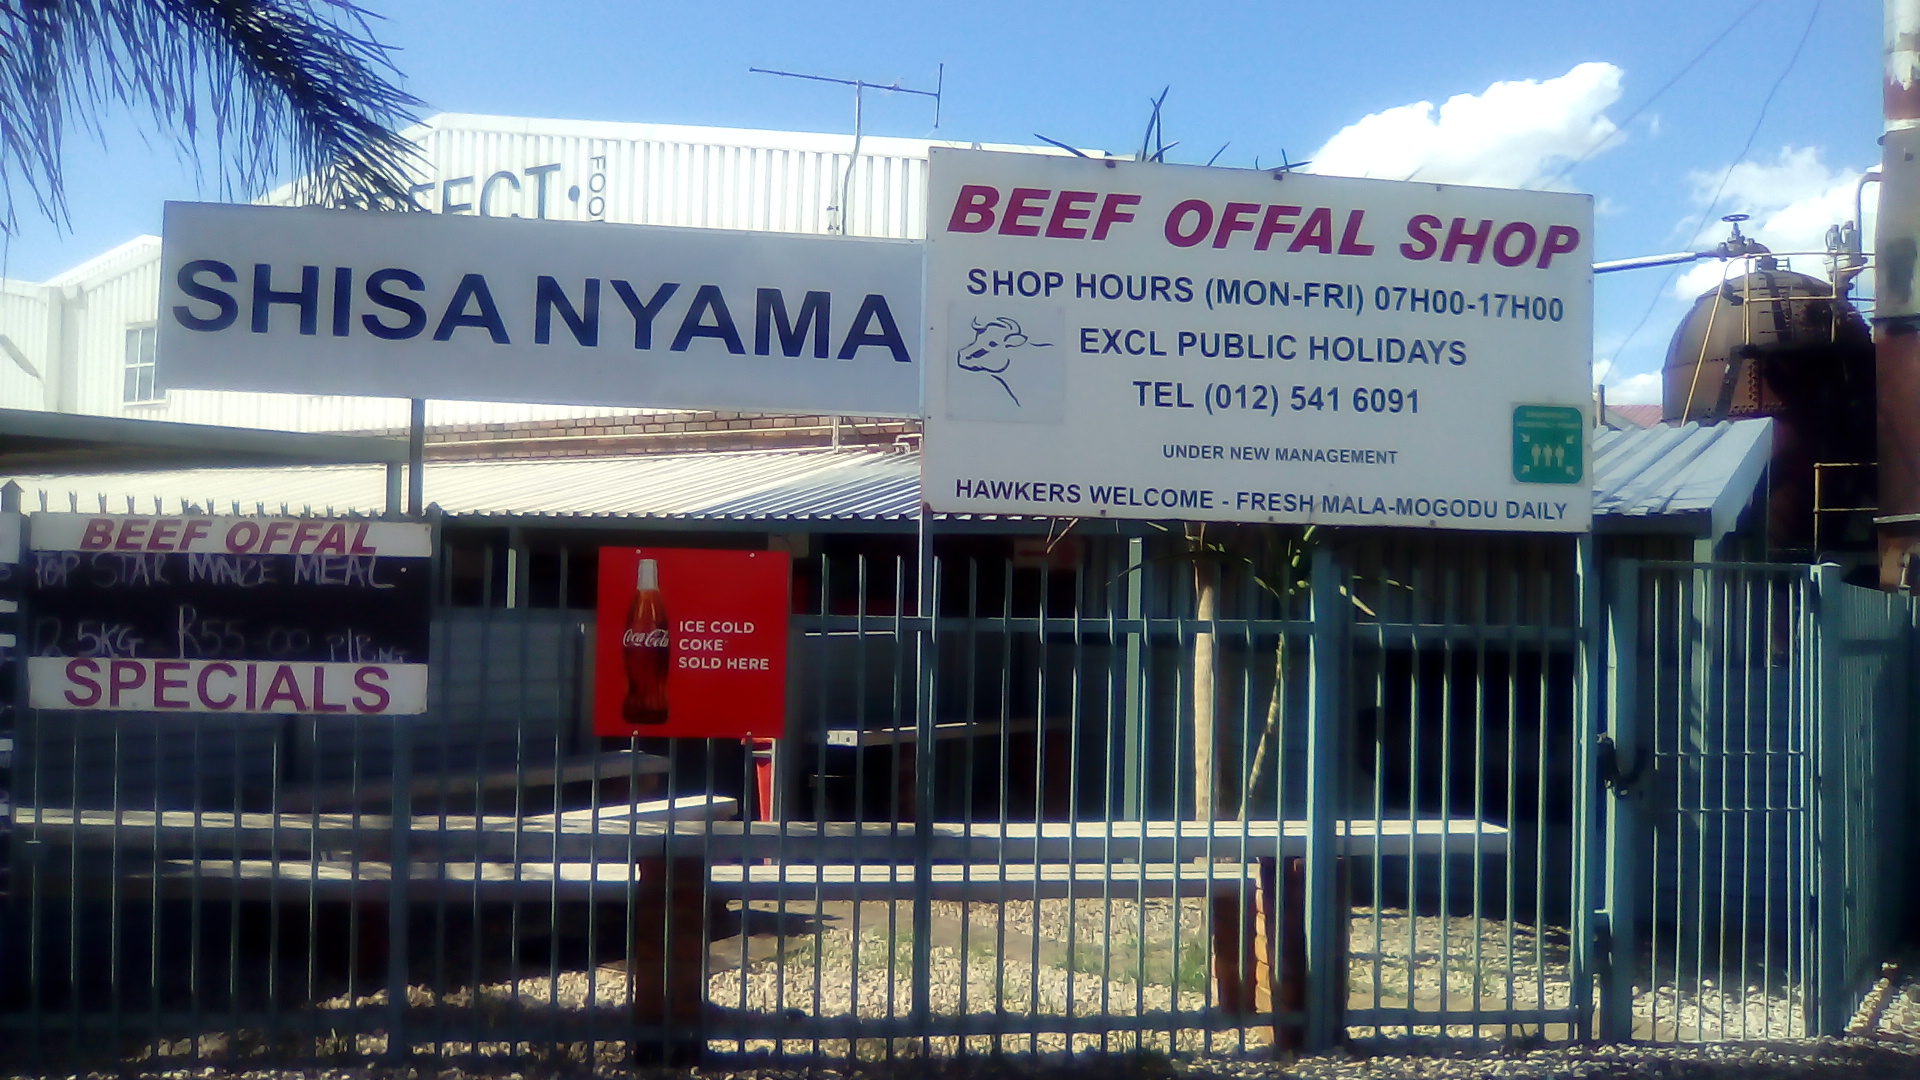 Beef Offal Shop